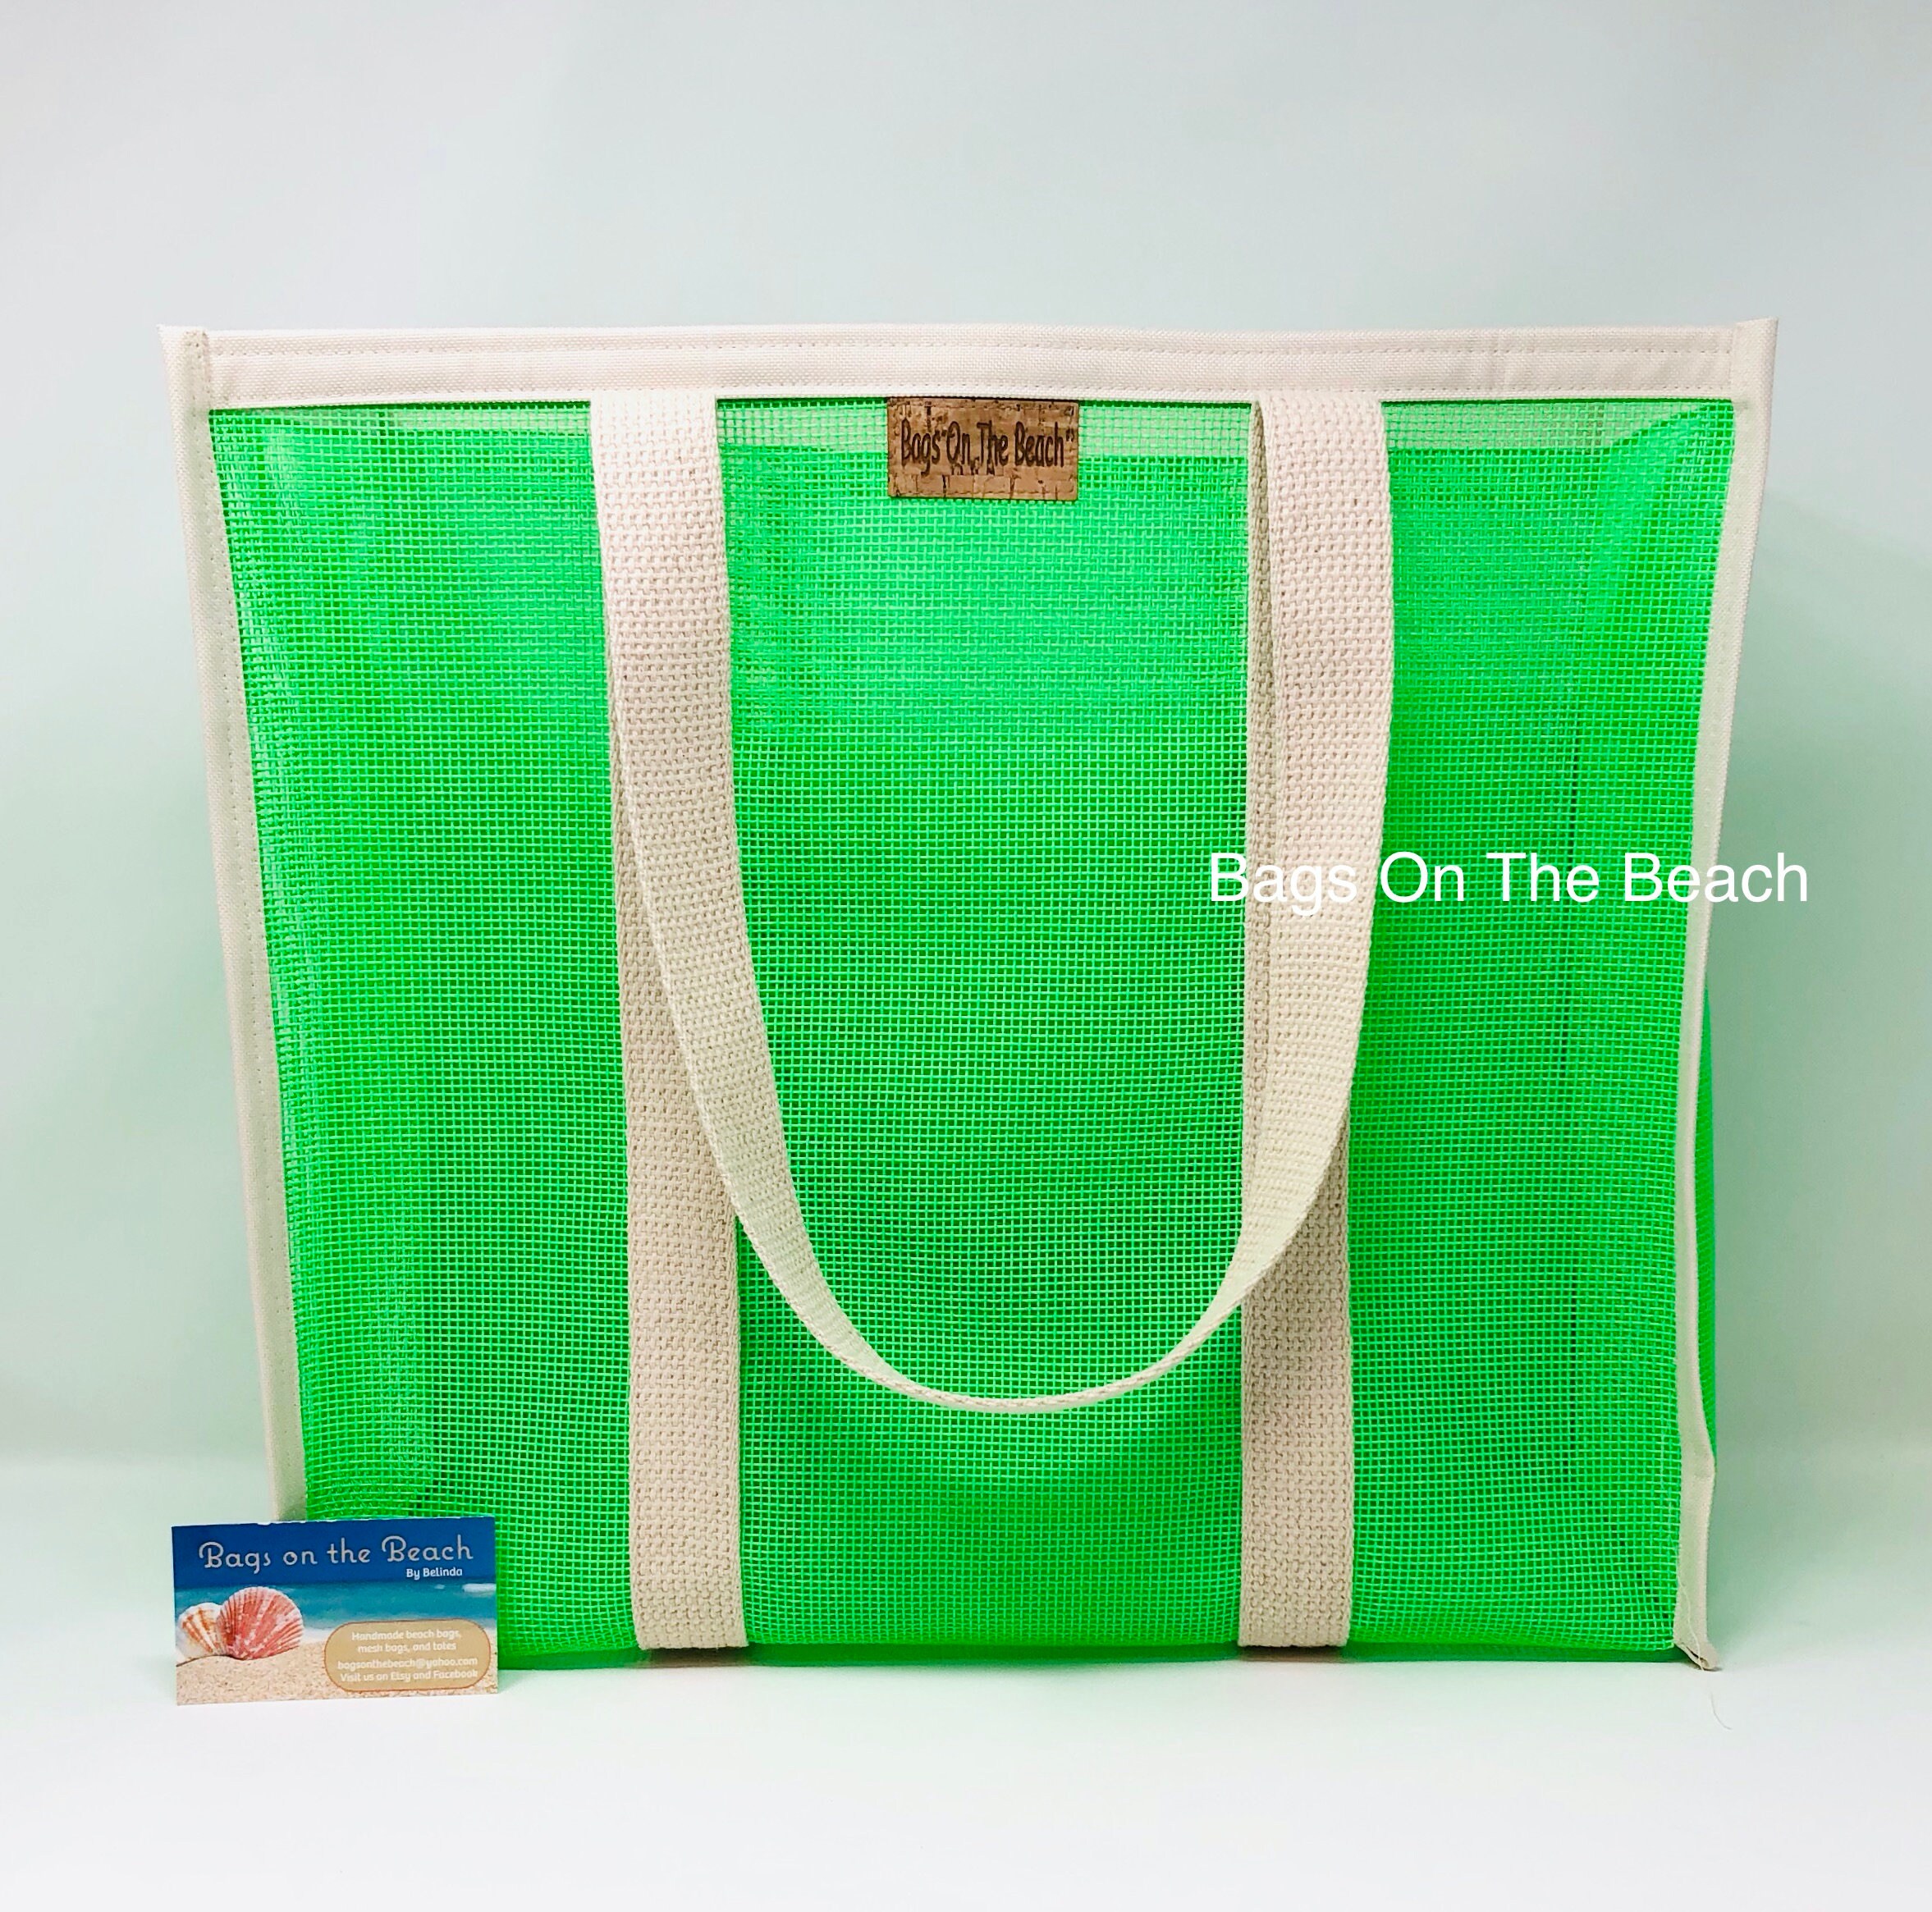 Pro Art Mesh and Vinyl Zipper Bag - 10-inch x 13 inch - Craft